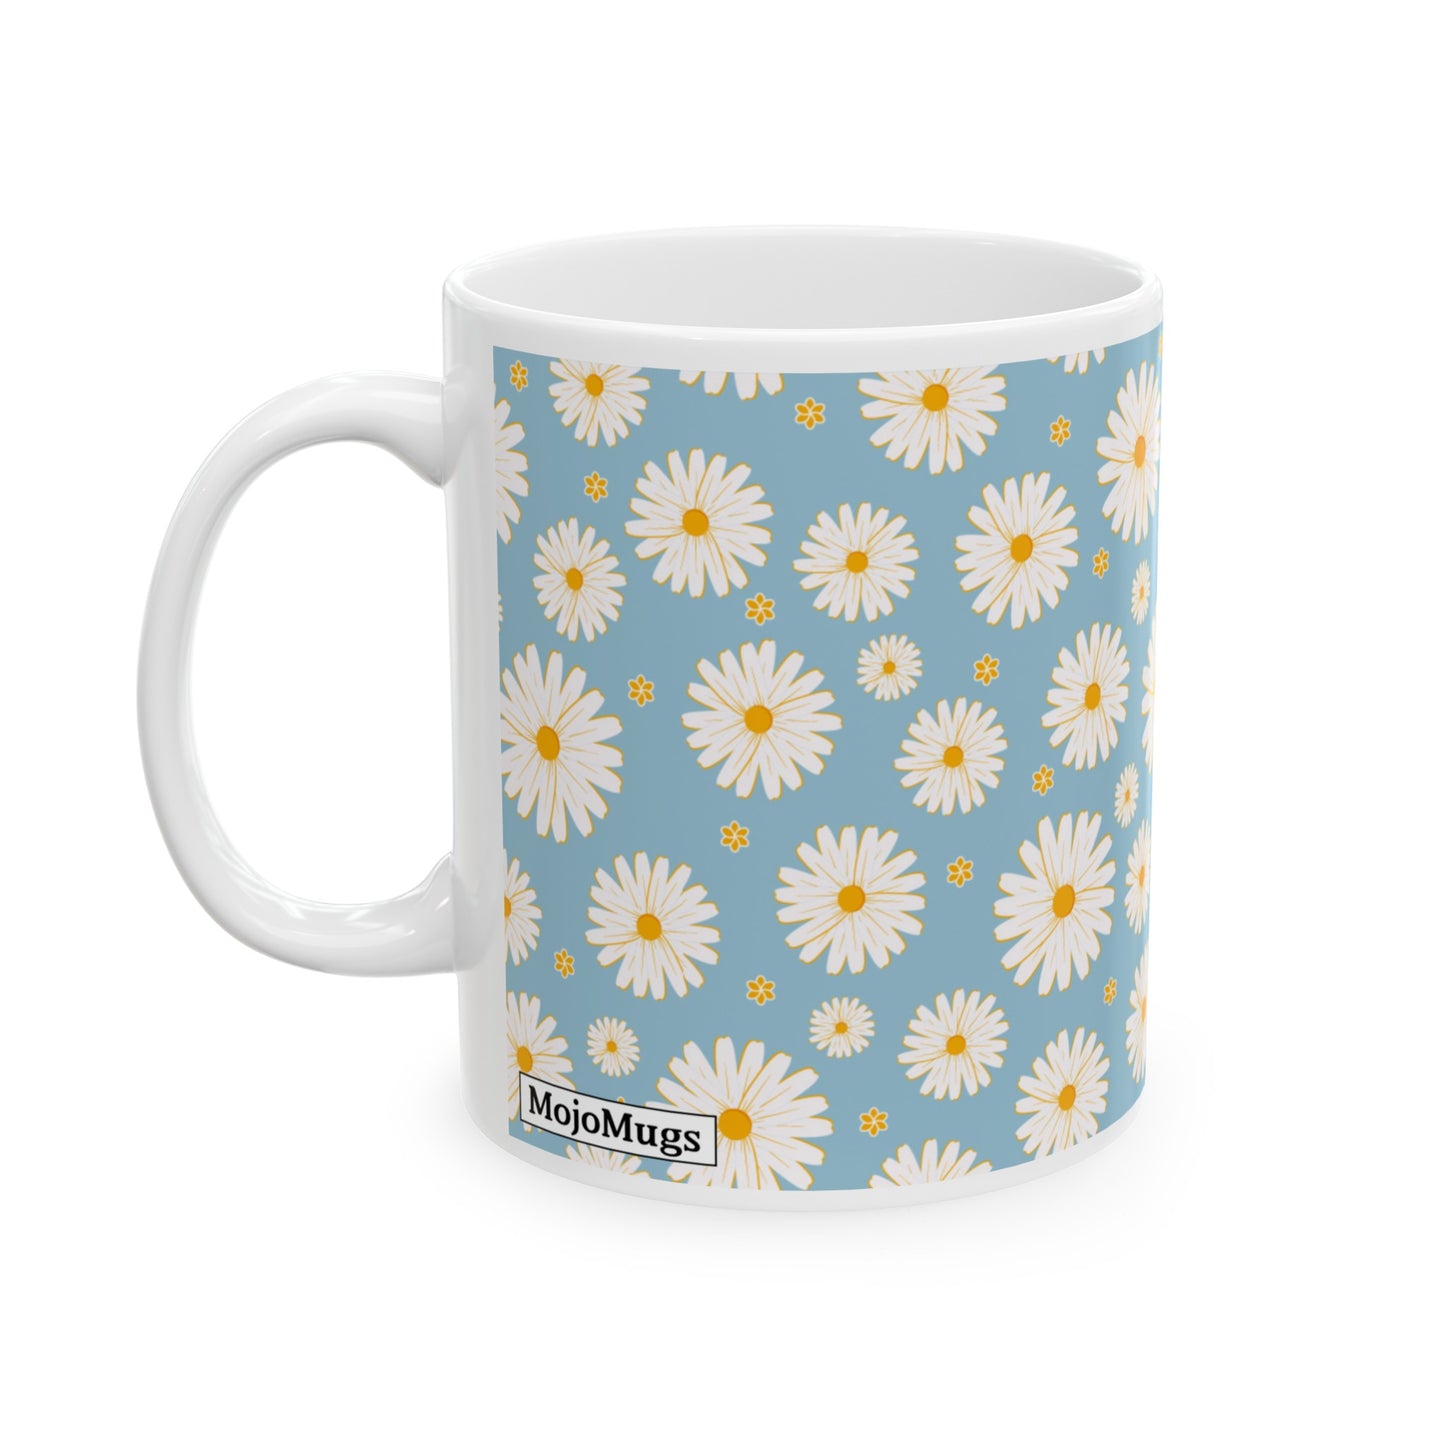 White Daisies - 11oz mug